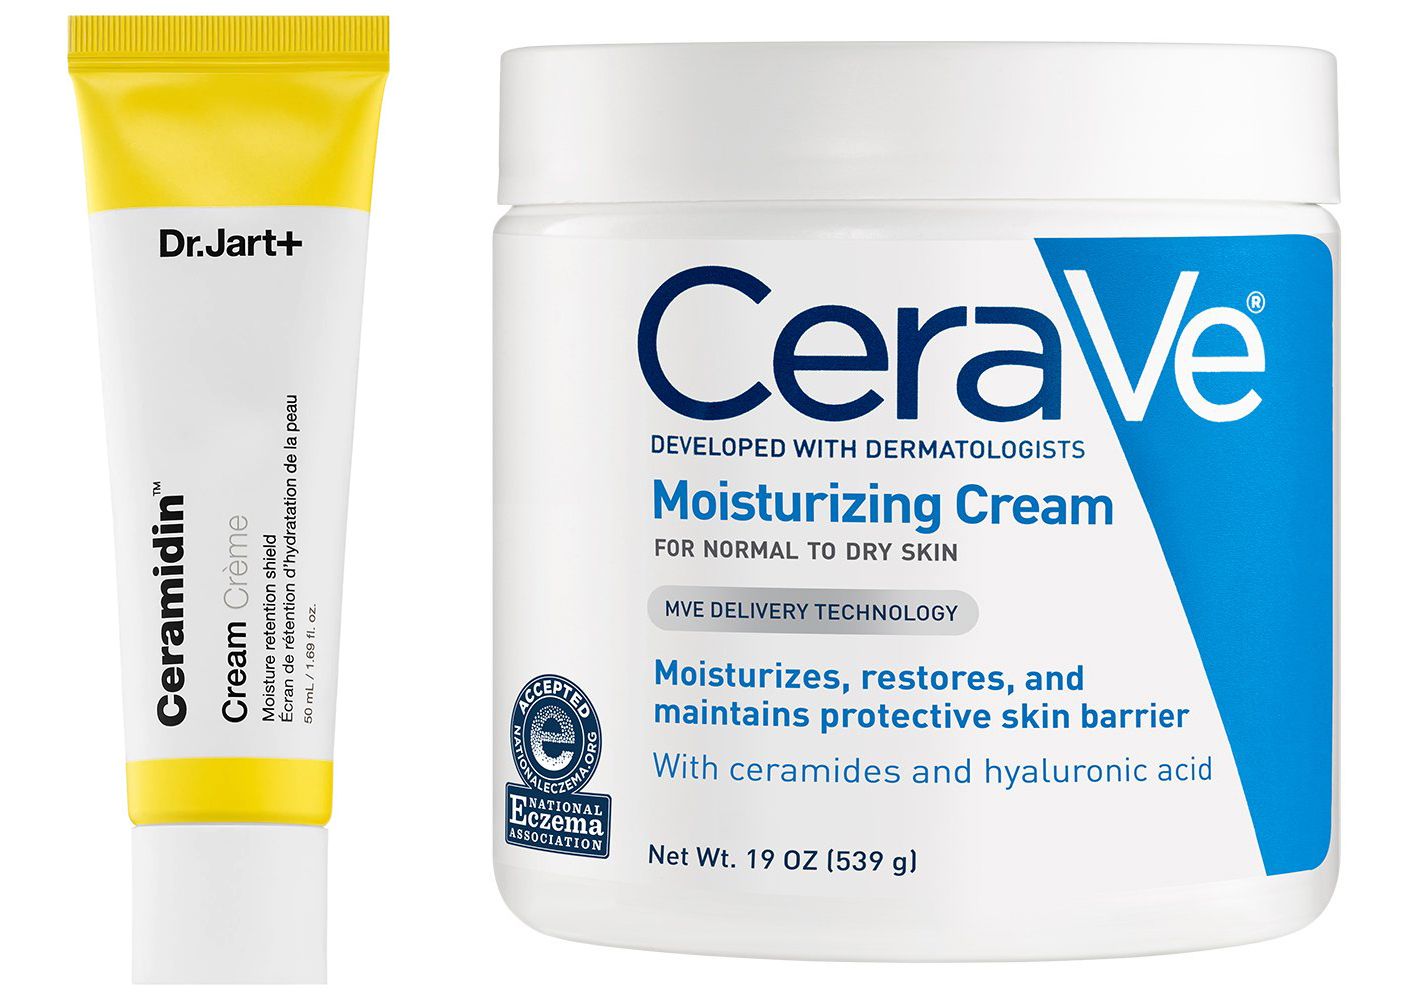 Dr. Jart + Ceramidin Cream vs. CeraVe Moisturizing Cream